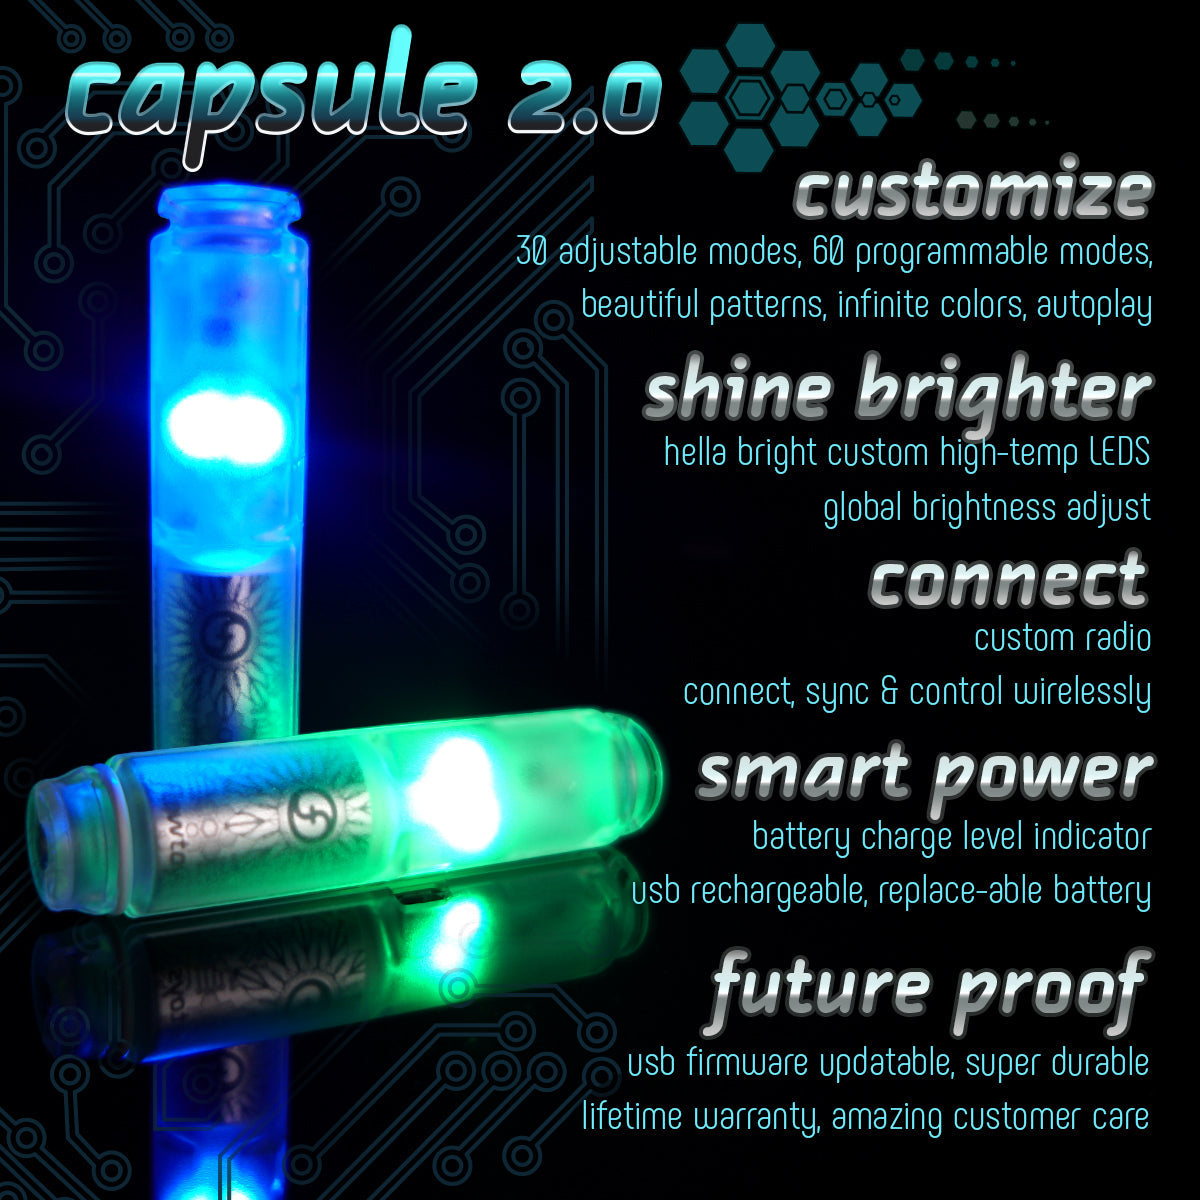 capsule 2.0 features info